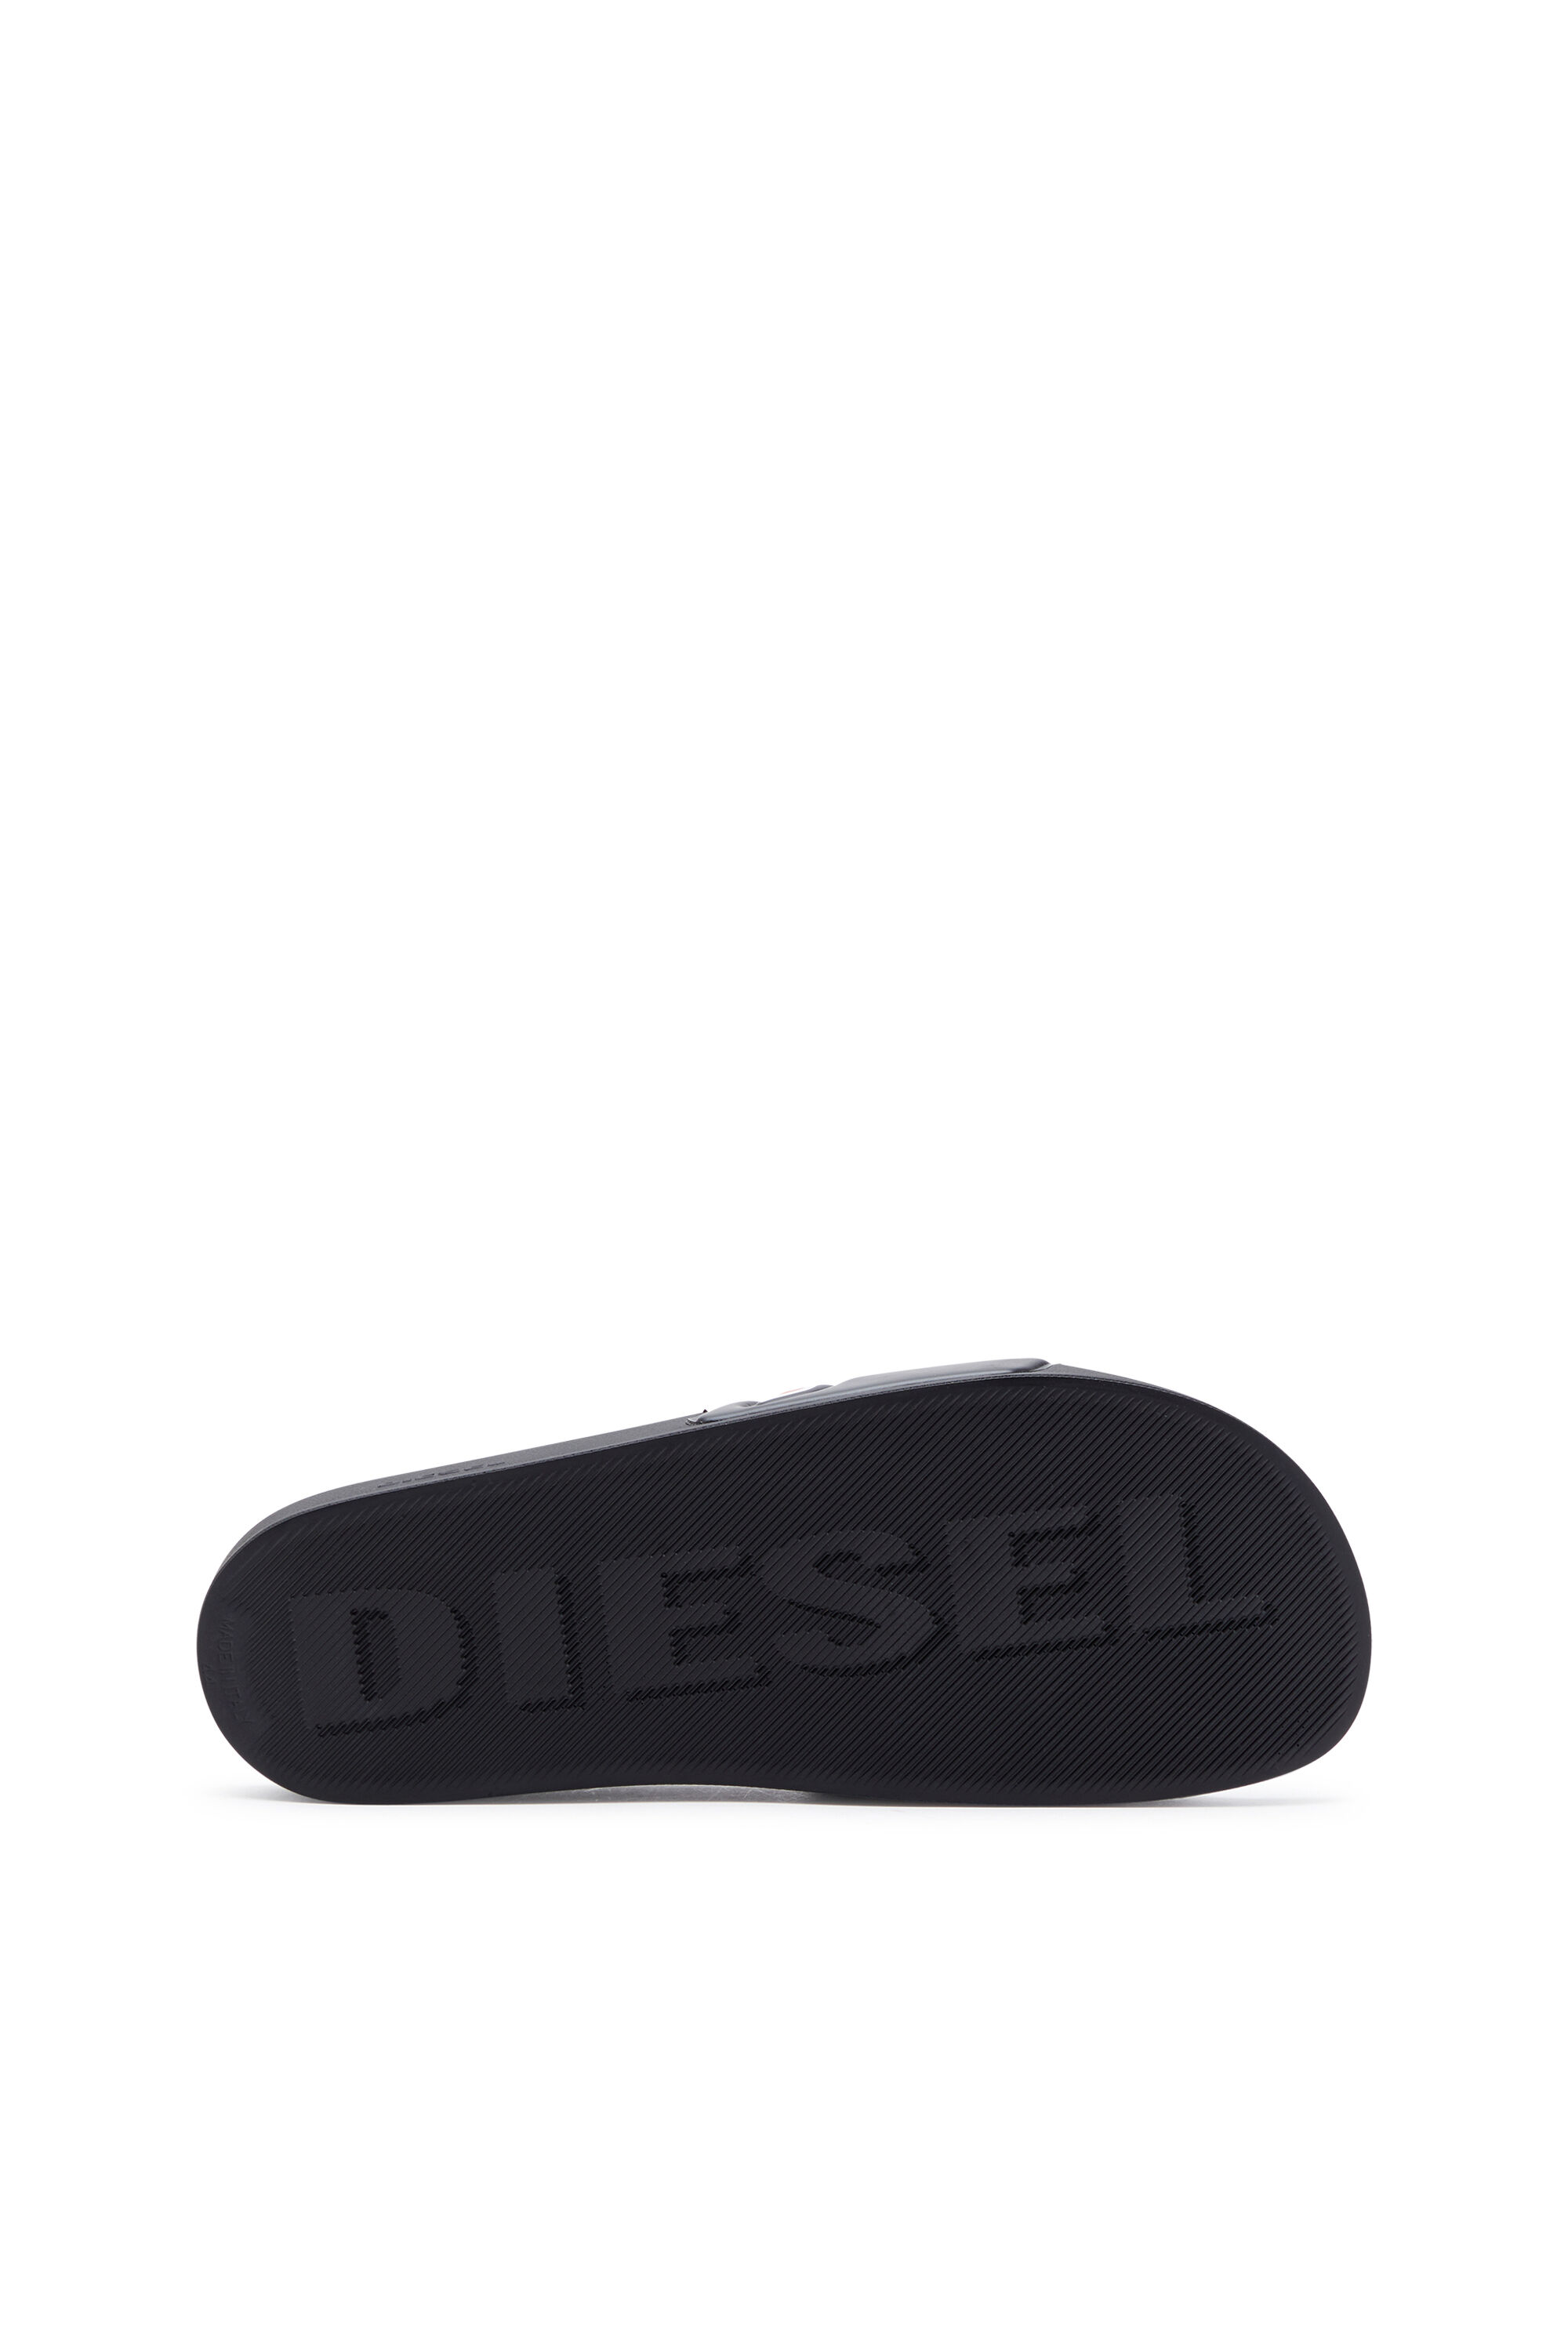 Diesel - SA-MAYEMI D, Black - Image 5